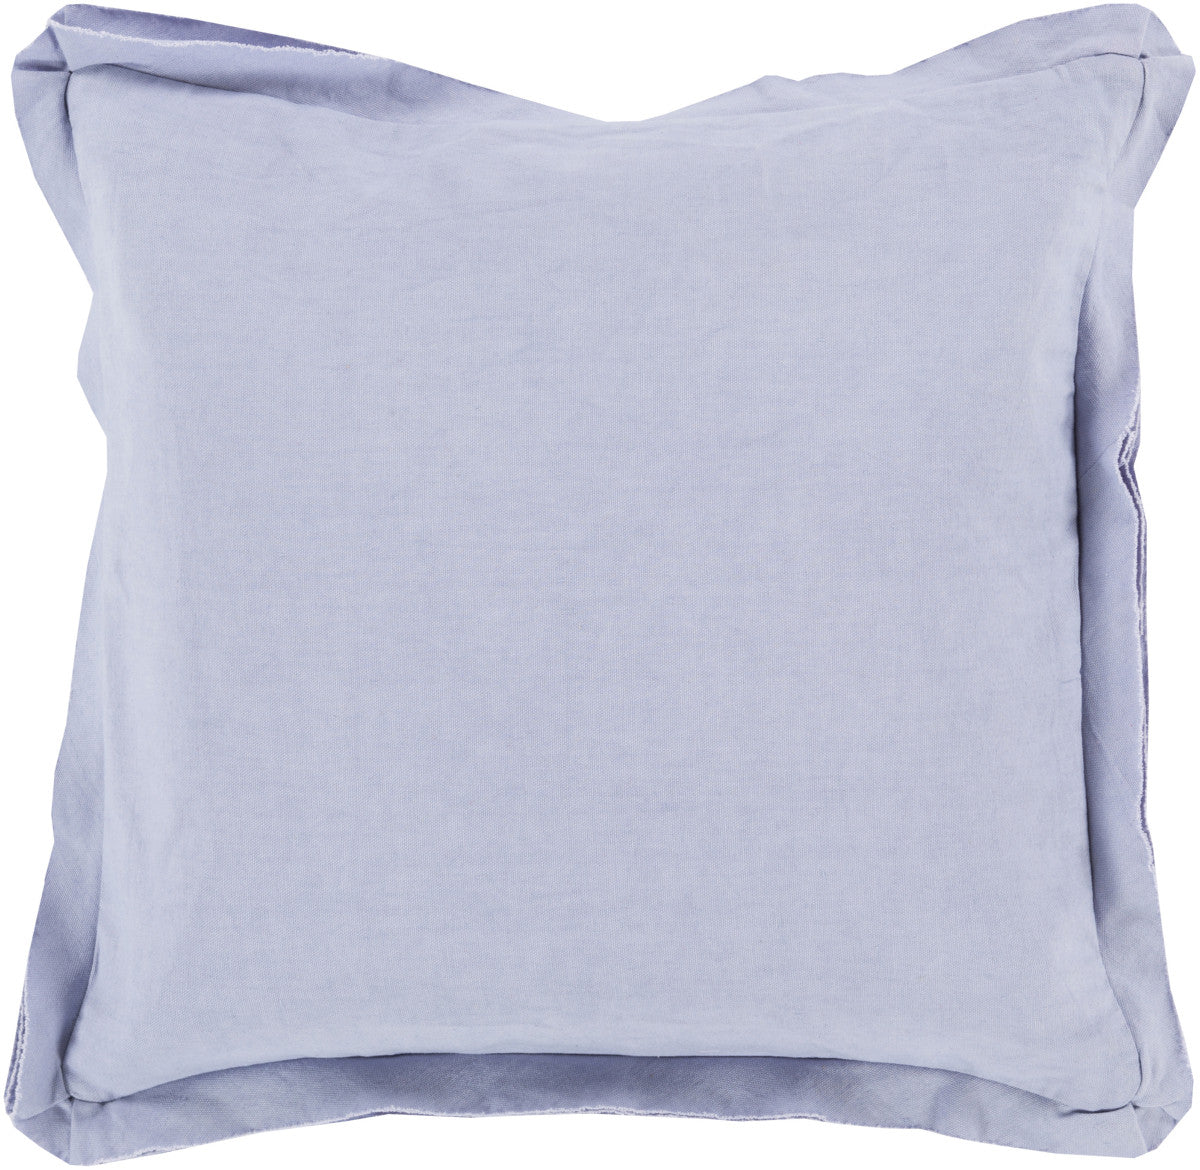 Surya Triple Flange Simple Sophistication TF-008 Pillow main image